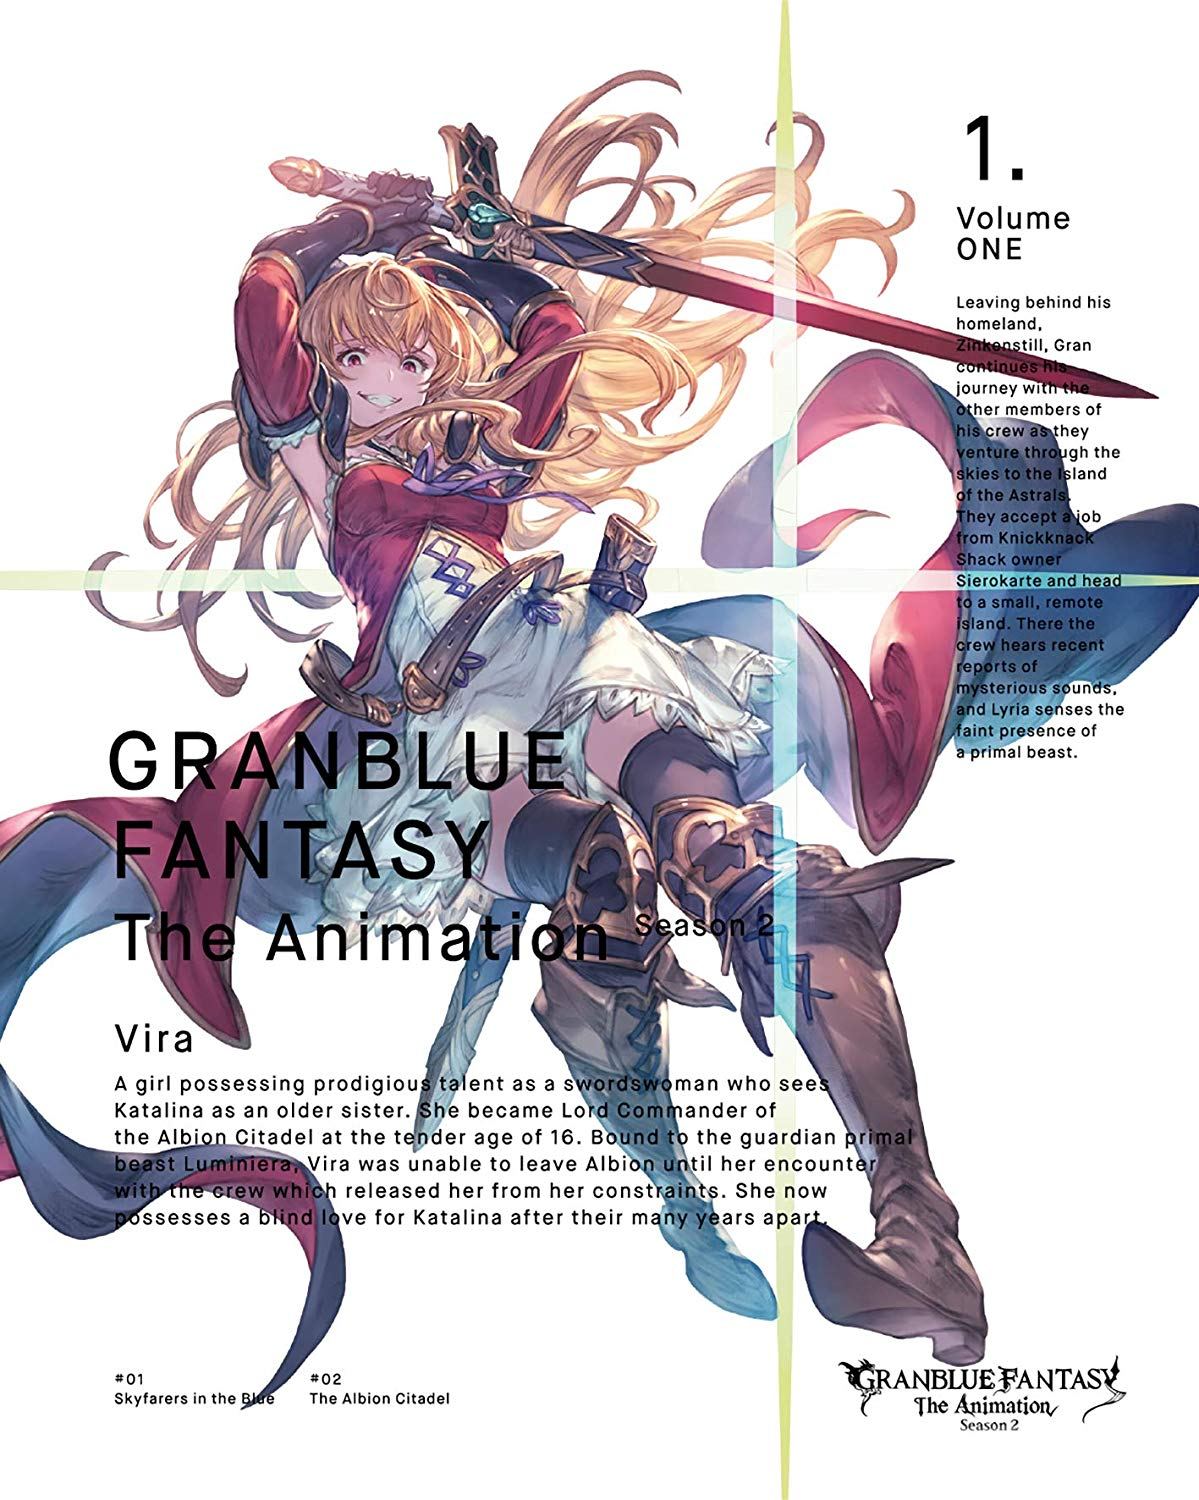 Granblue Fantasy The Animation Season 2  [Limited Edition]